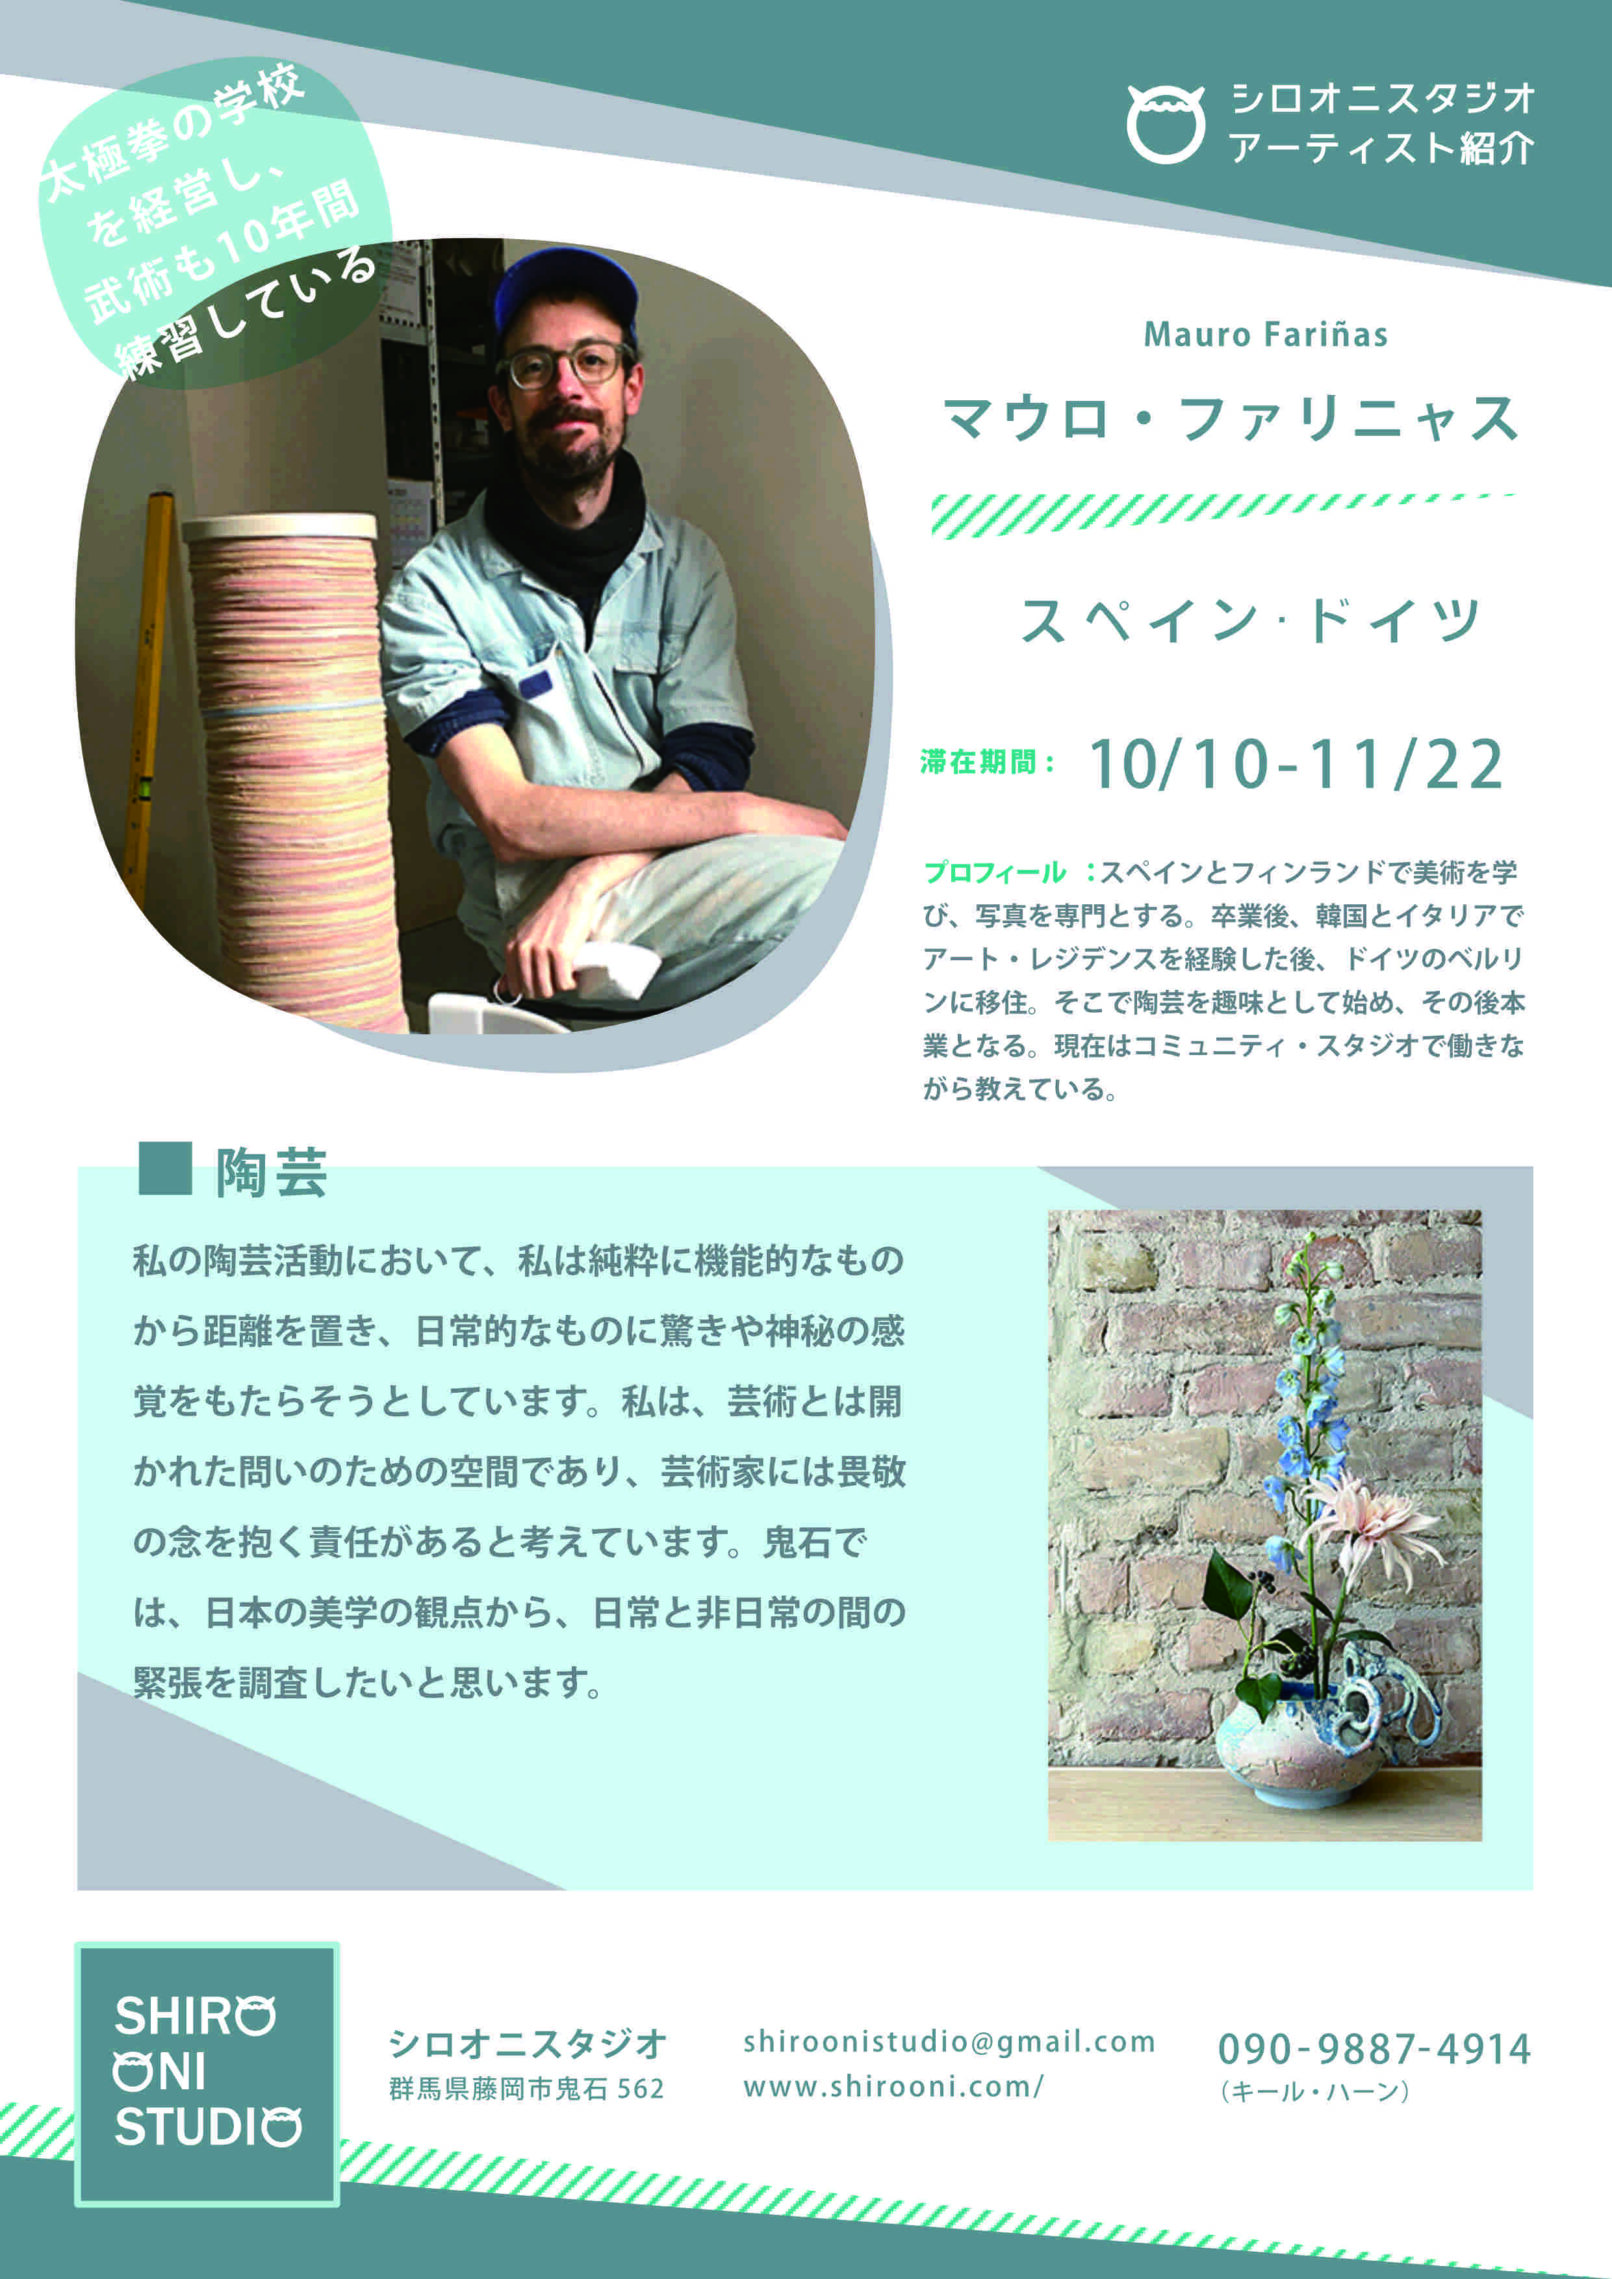 Mauro Fariñas participated in the Shiro Oni Studio art residency program in Onishi Japan.